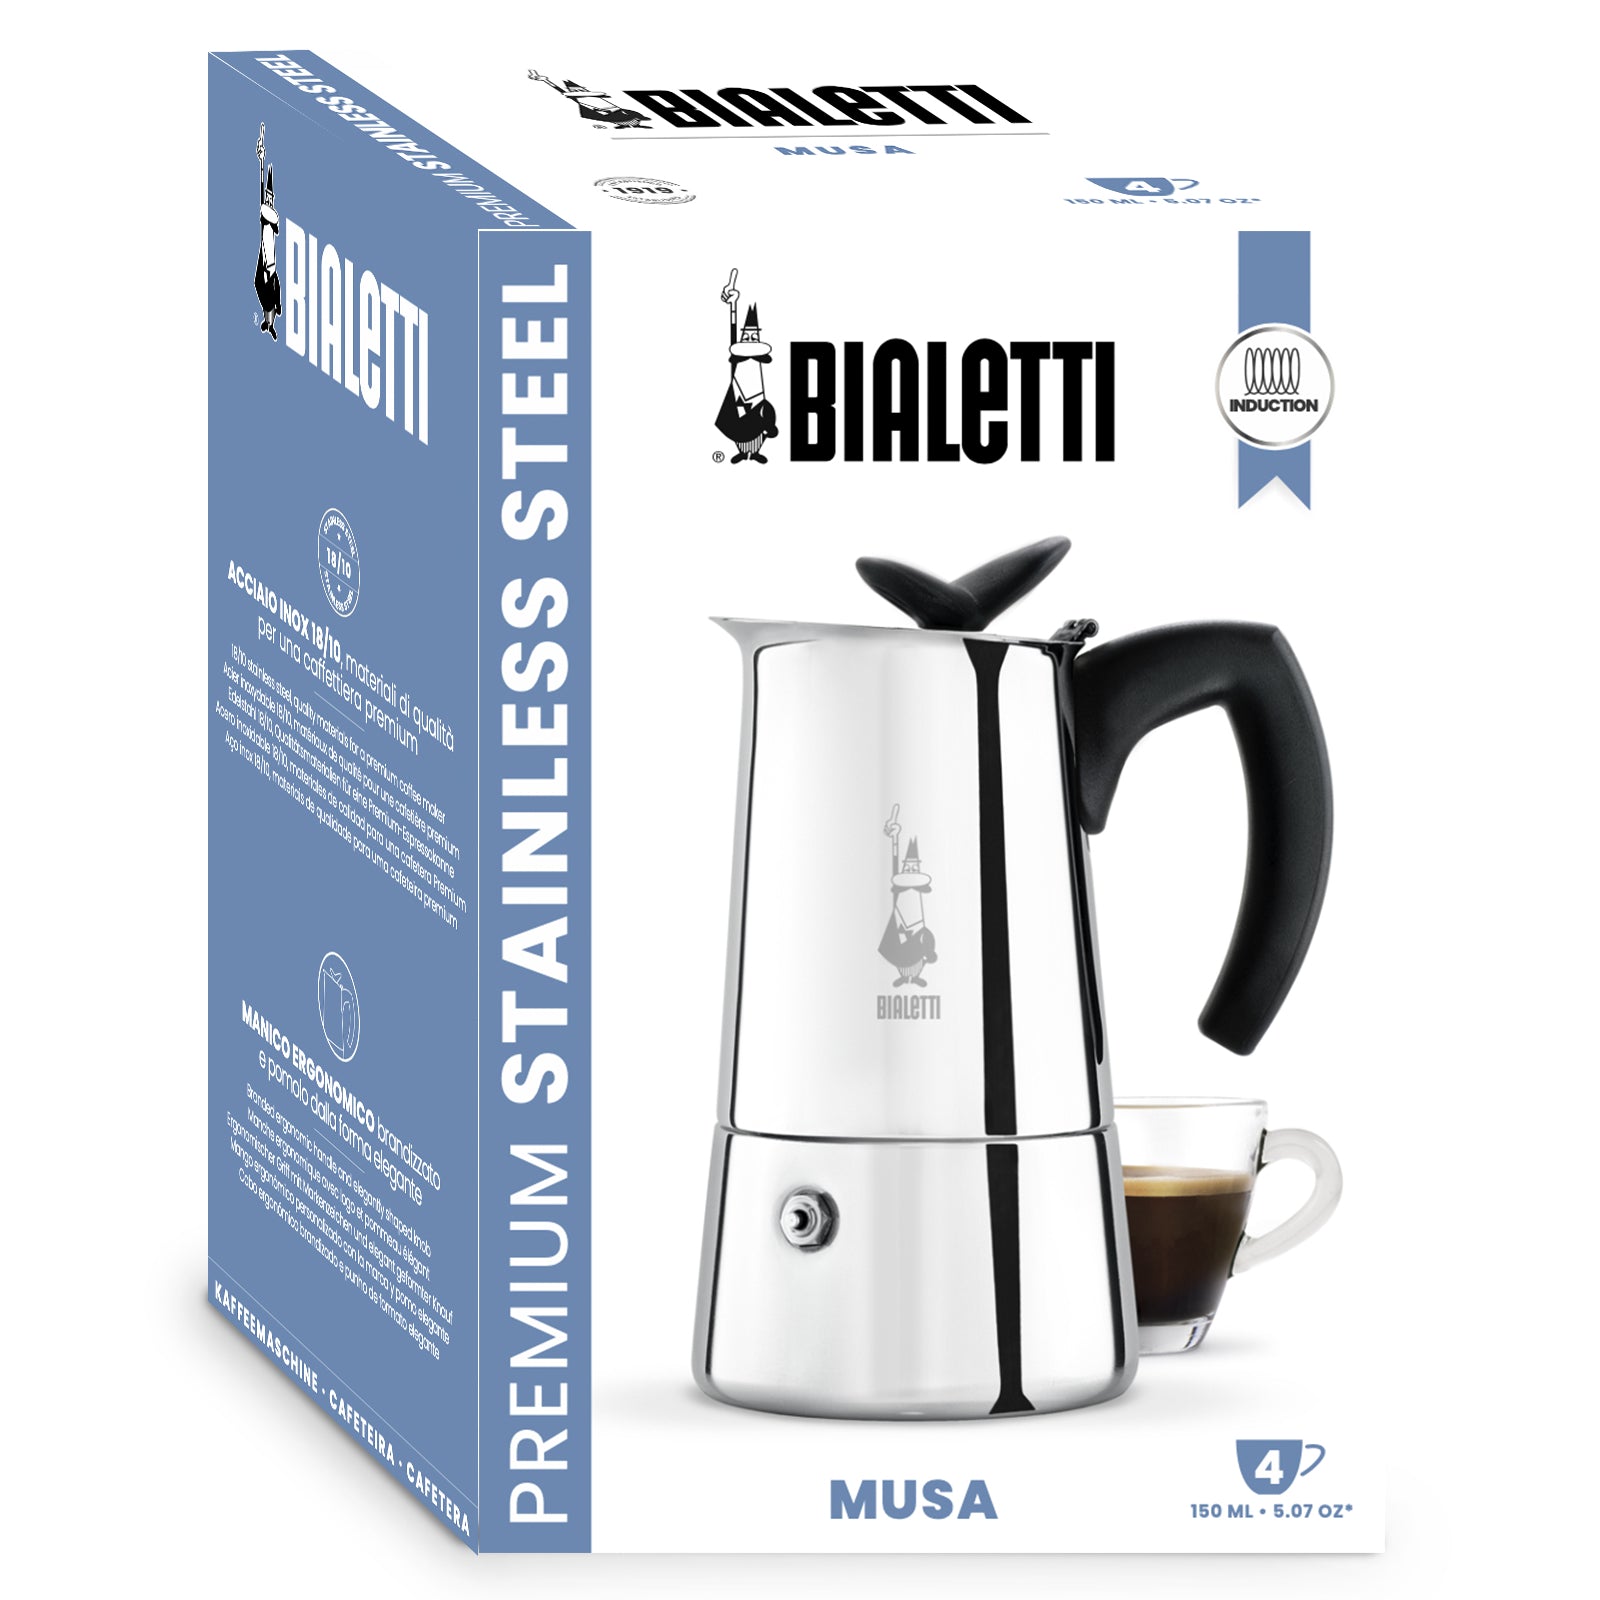 Cafetera Bialetti Moka Induction 2 Cups Italiana Manual